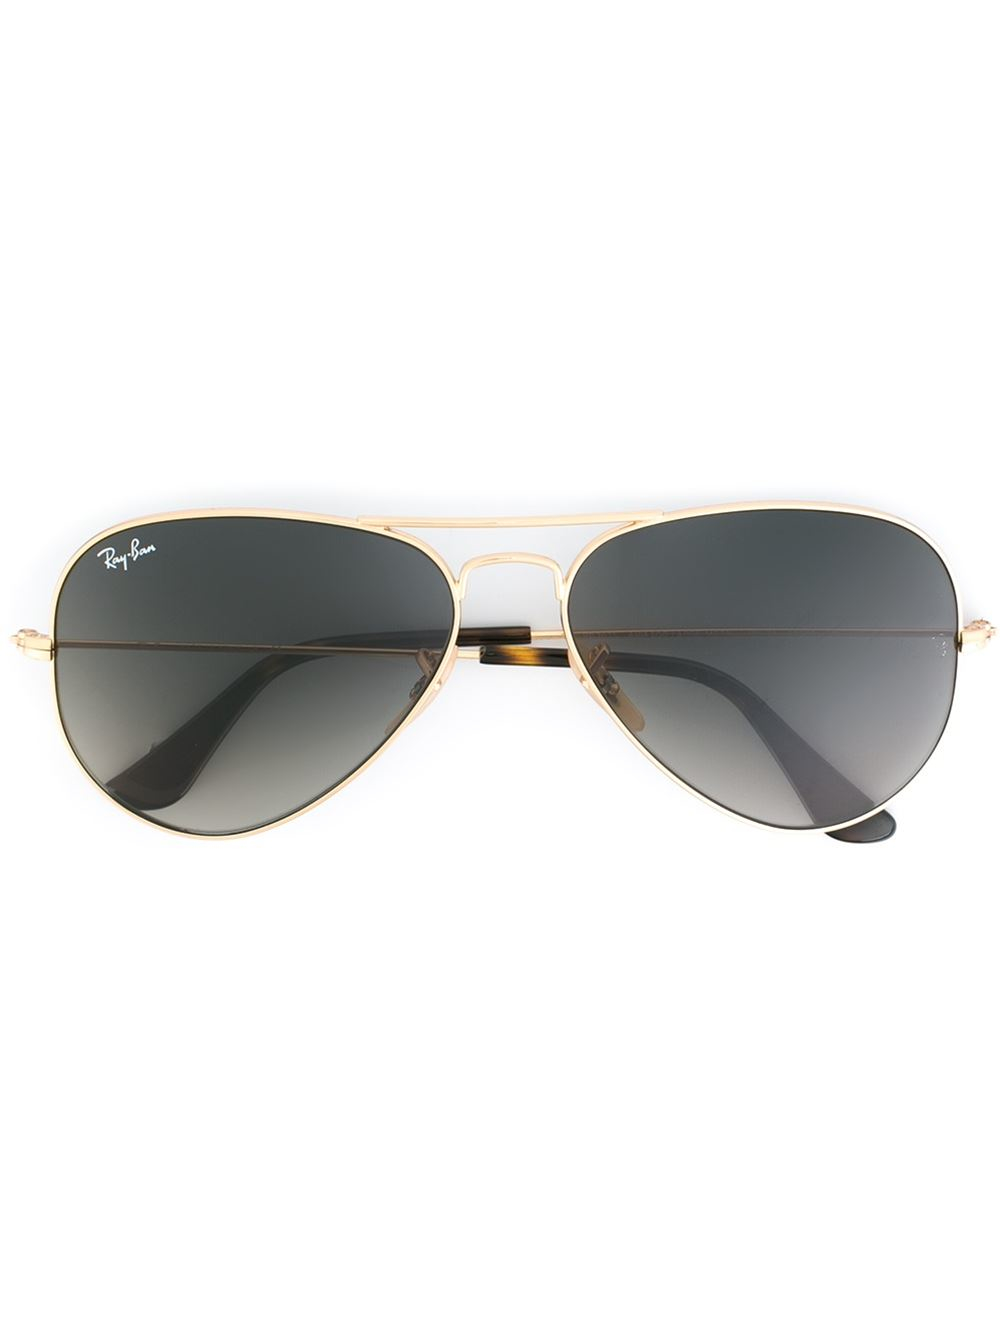 Lyst - Ray-Ban Aviator Sunglasses in Metallic for Men